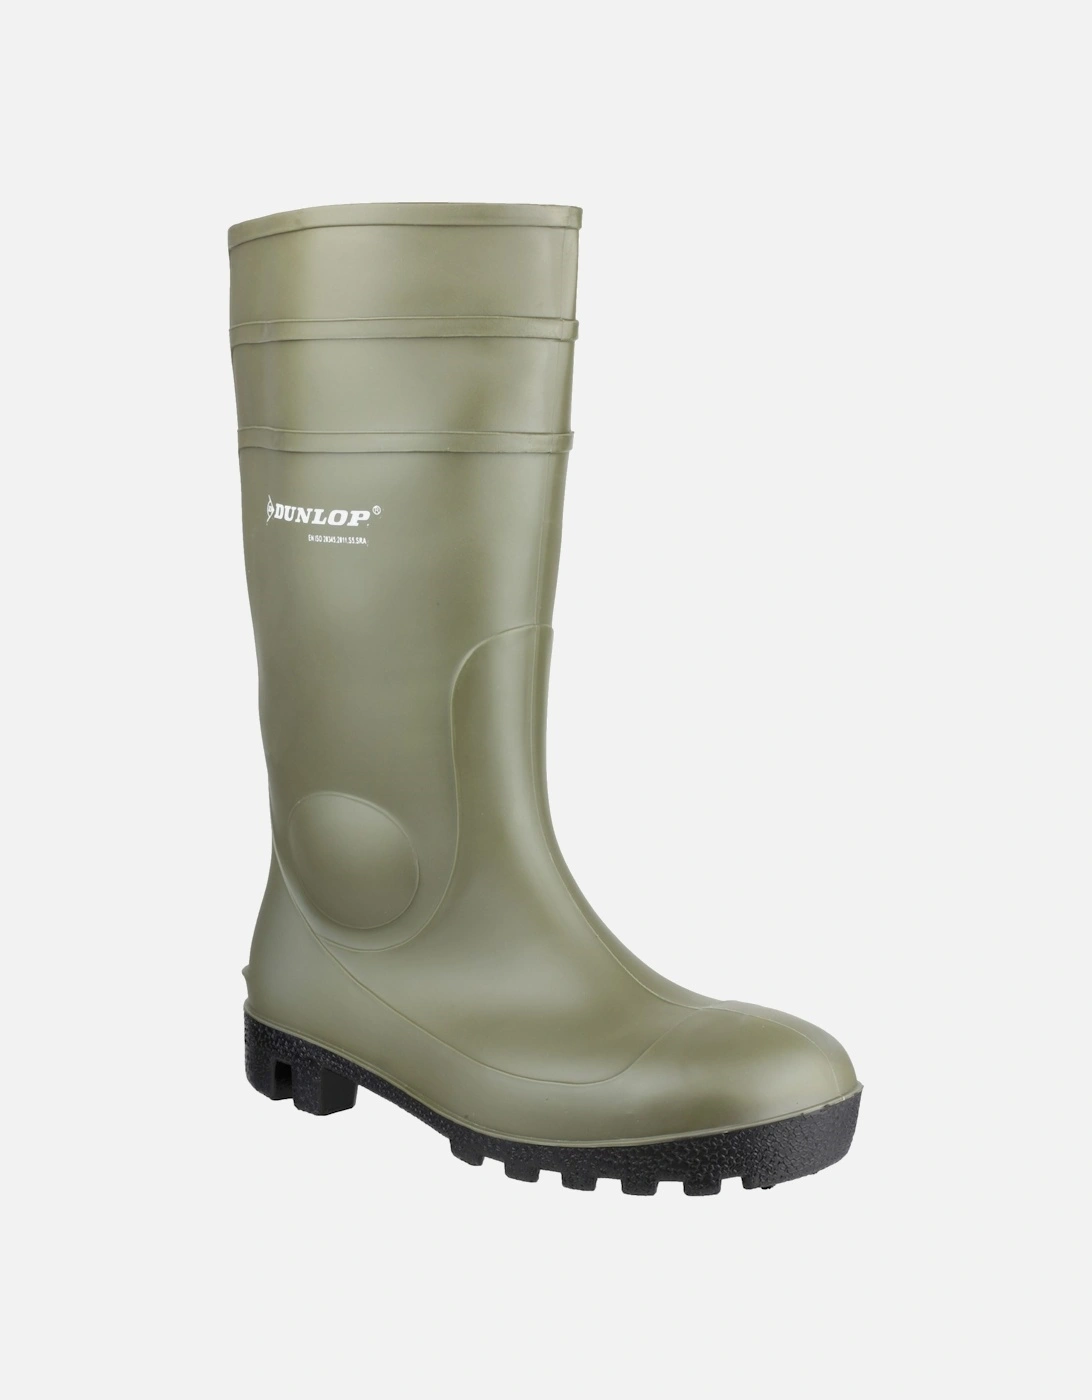 Unisex FS1700/142VP Wellington Boot / Mens Womens Boots